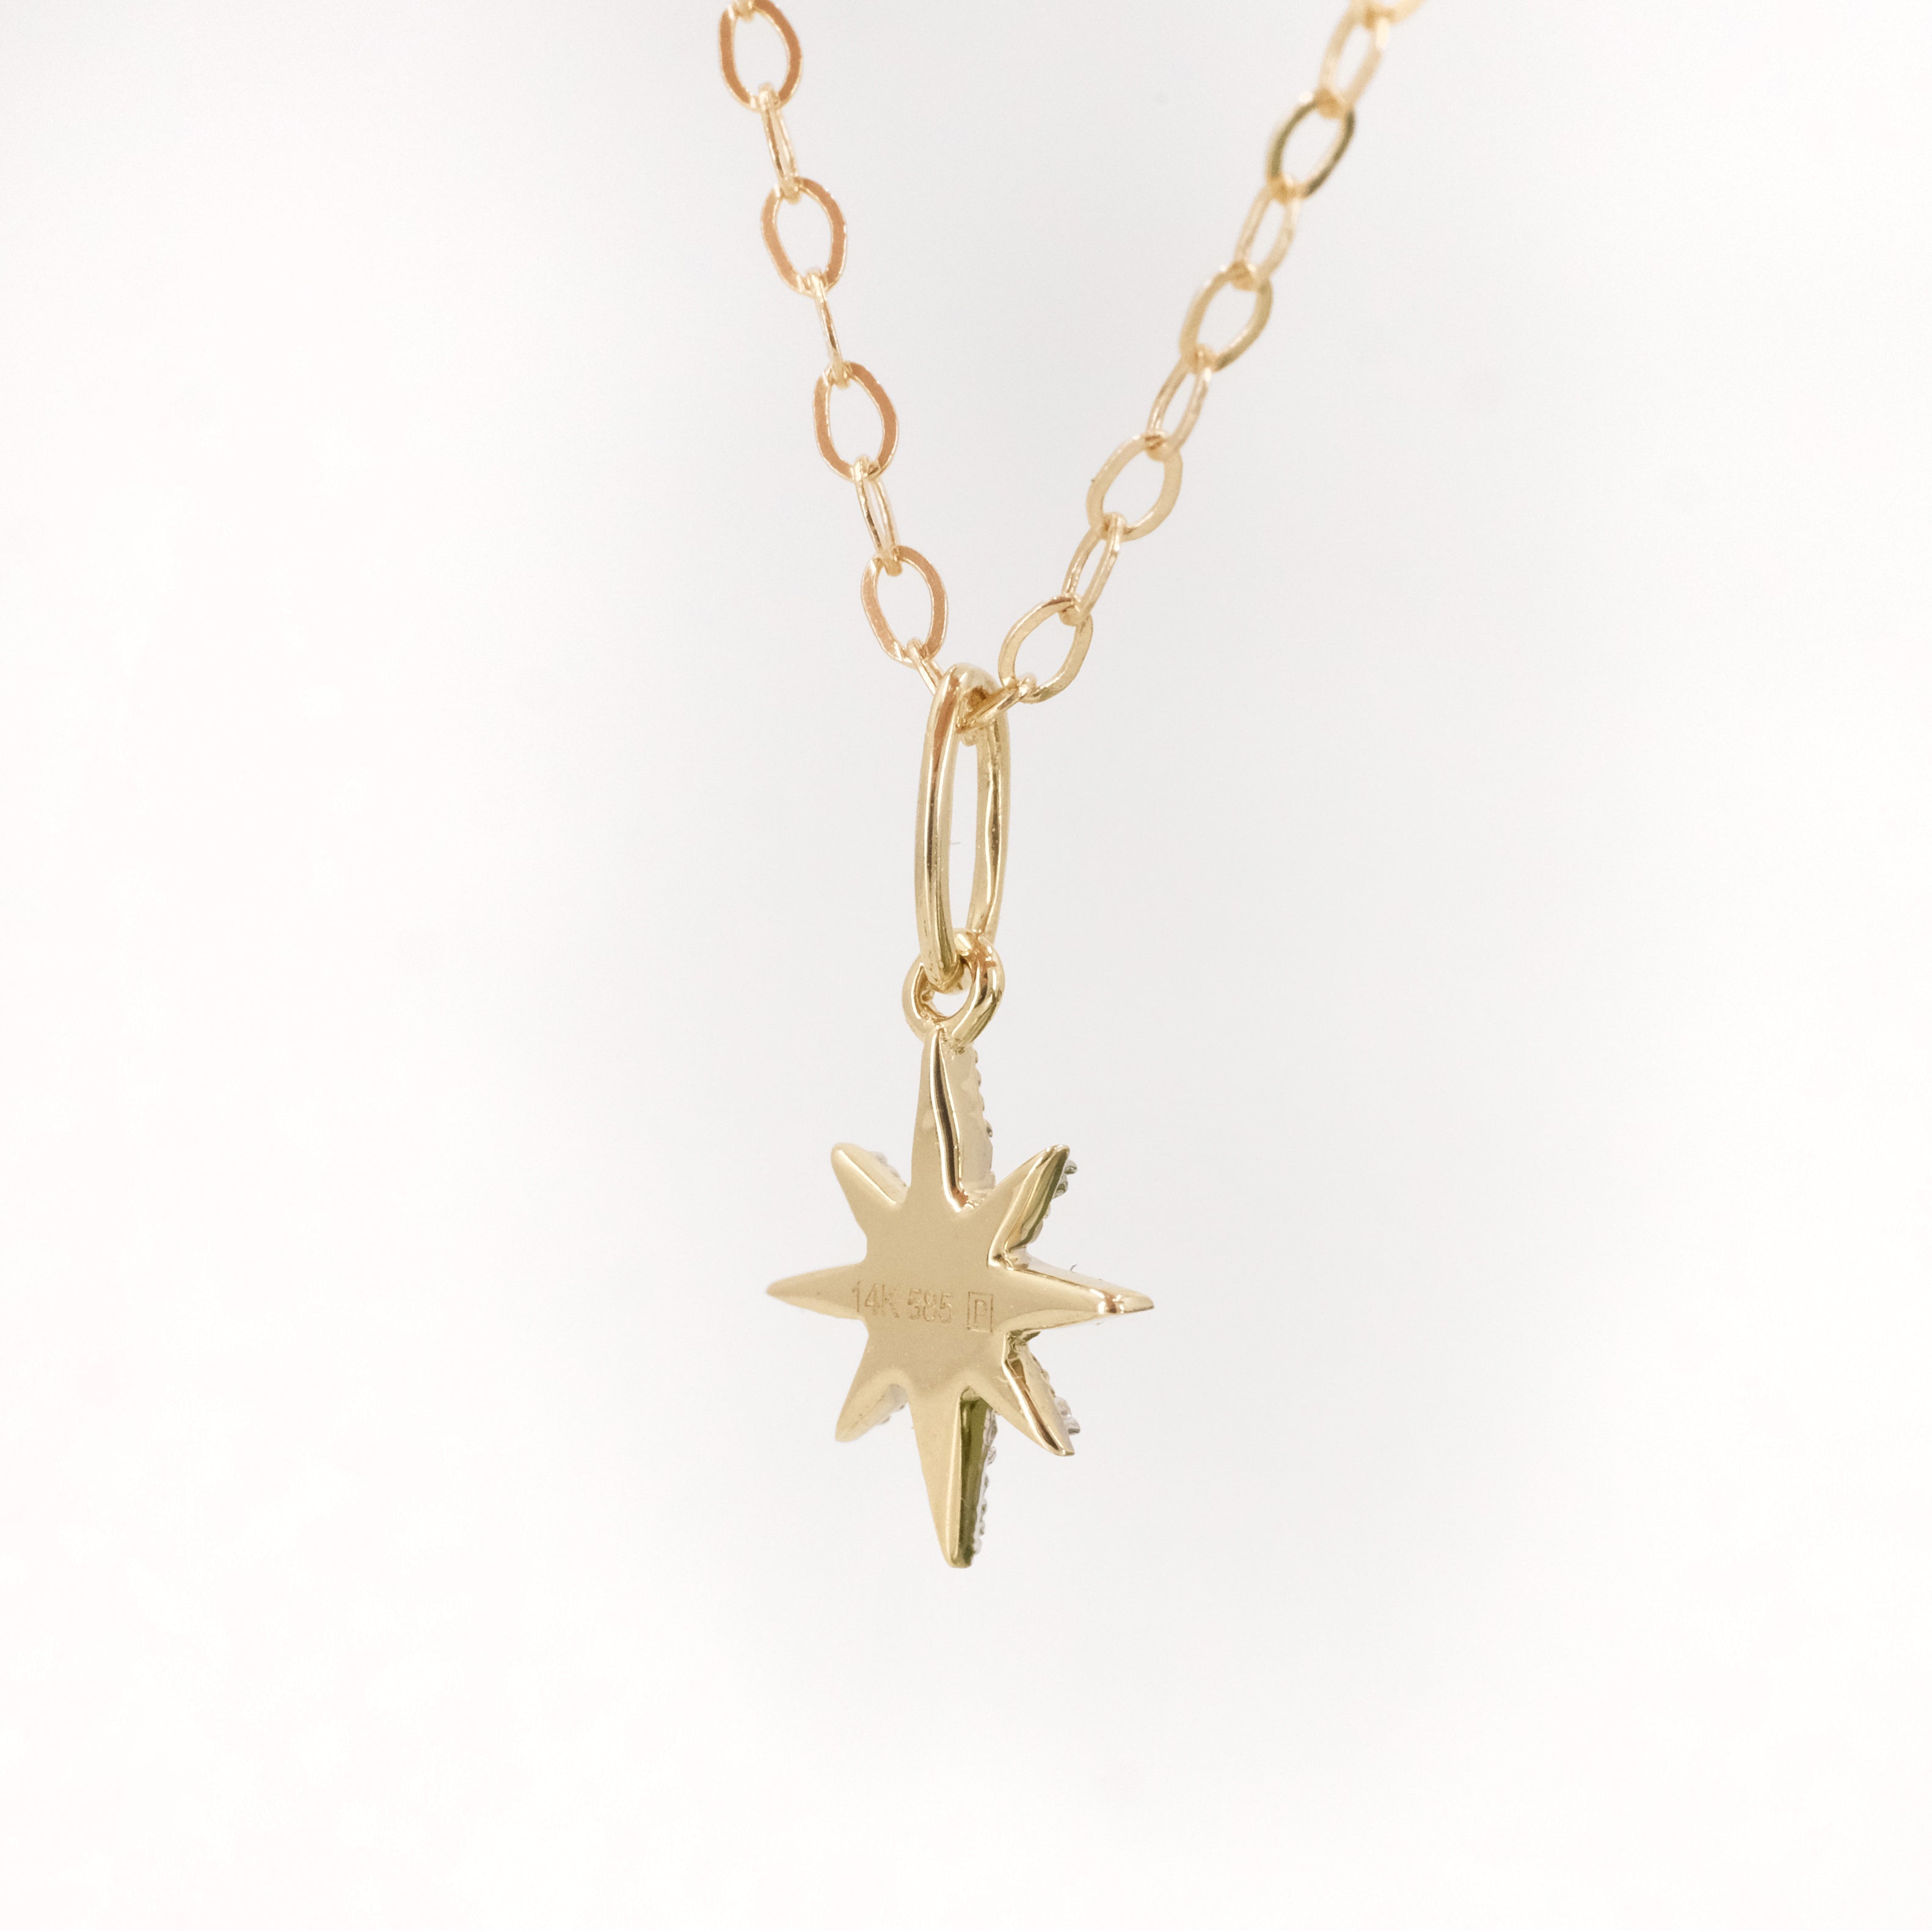 14k + Diamond North Star Necklace